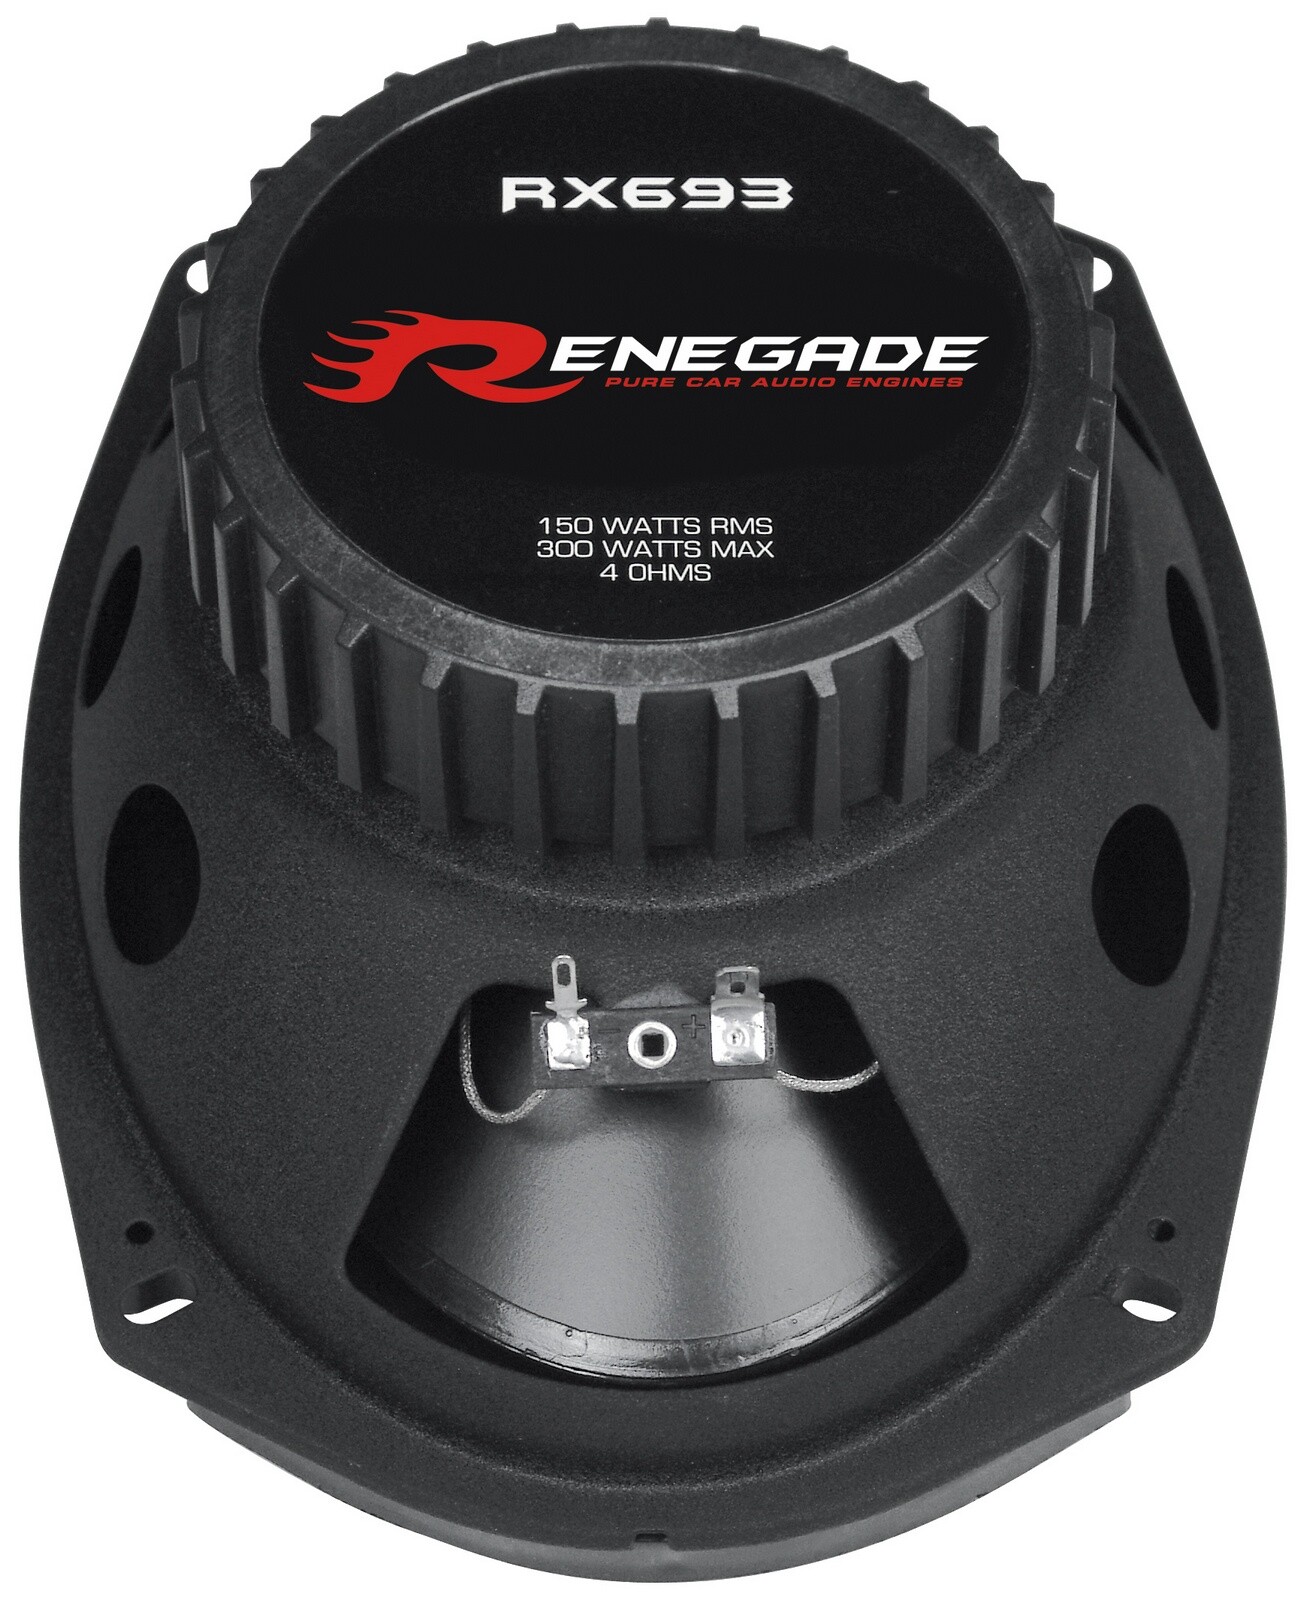 Renegade RX693